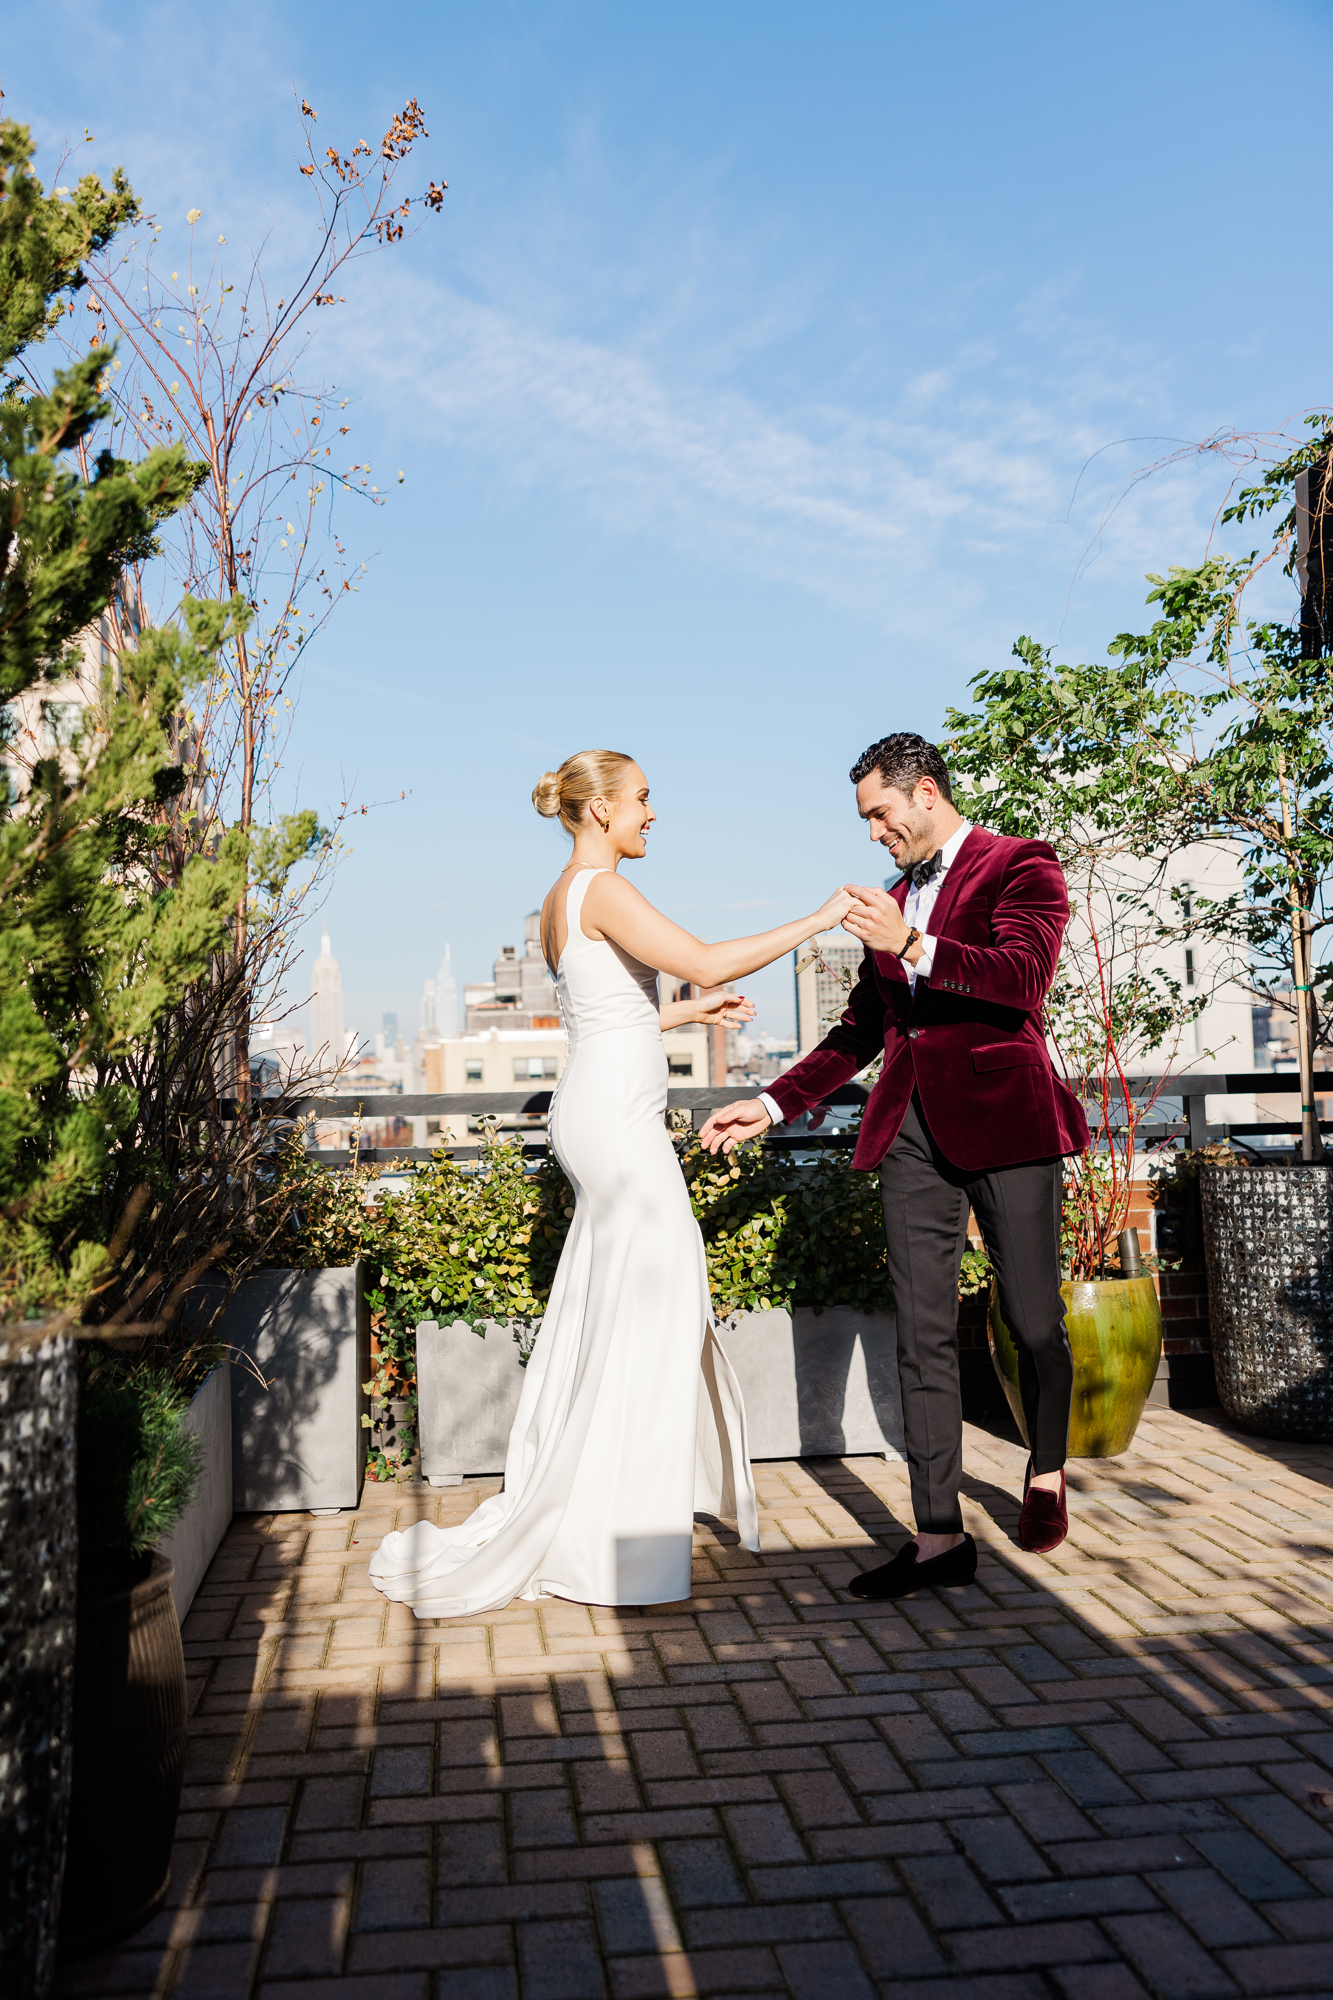 Astounding New York Wedding Photography at City Winery